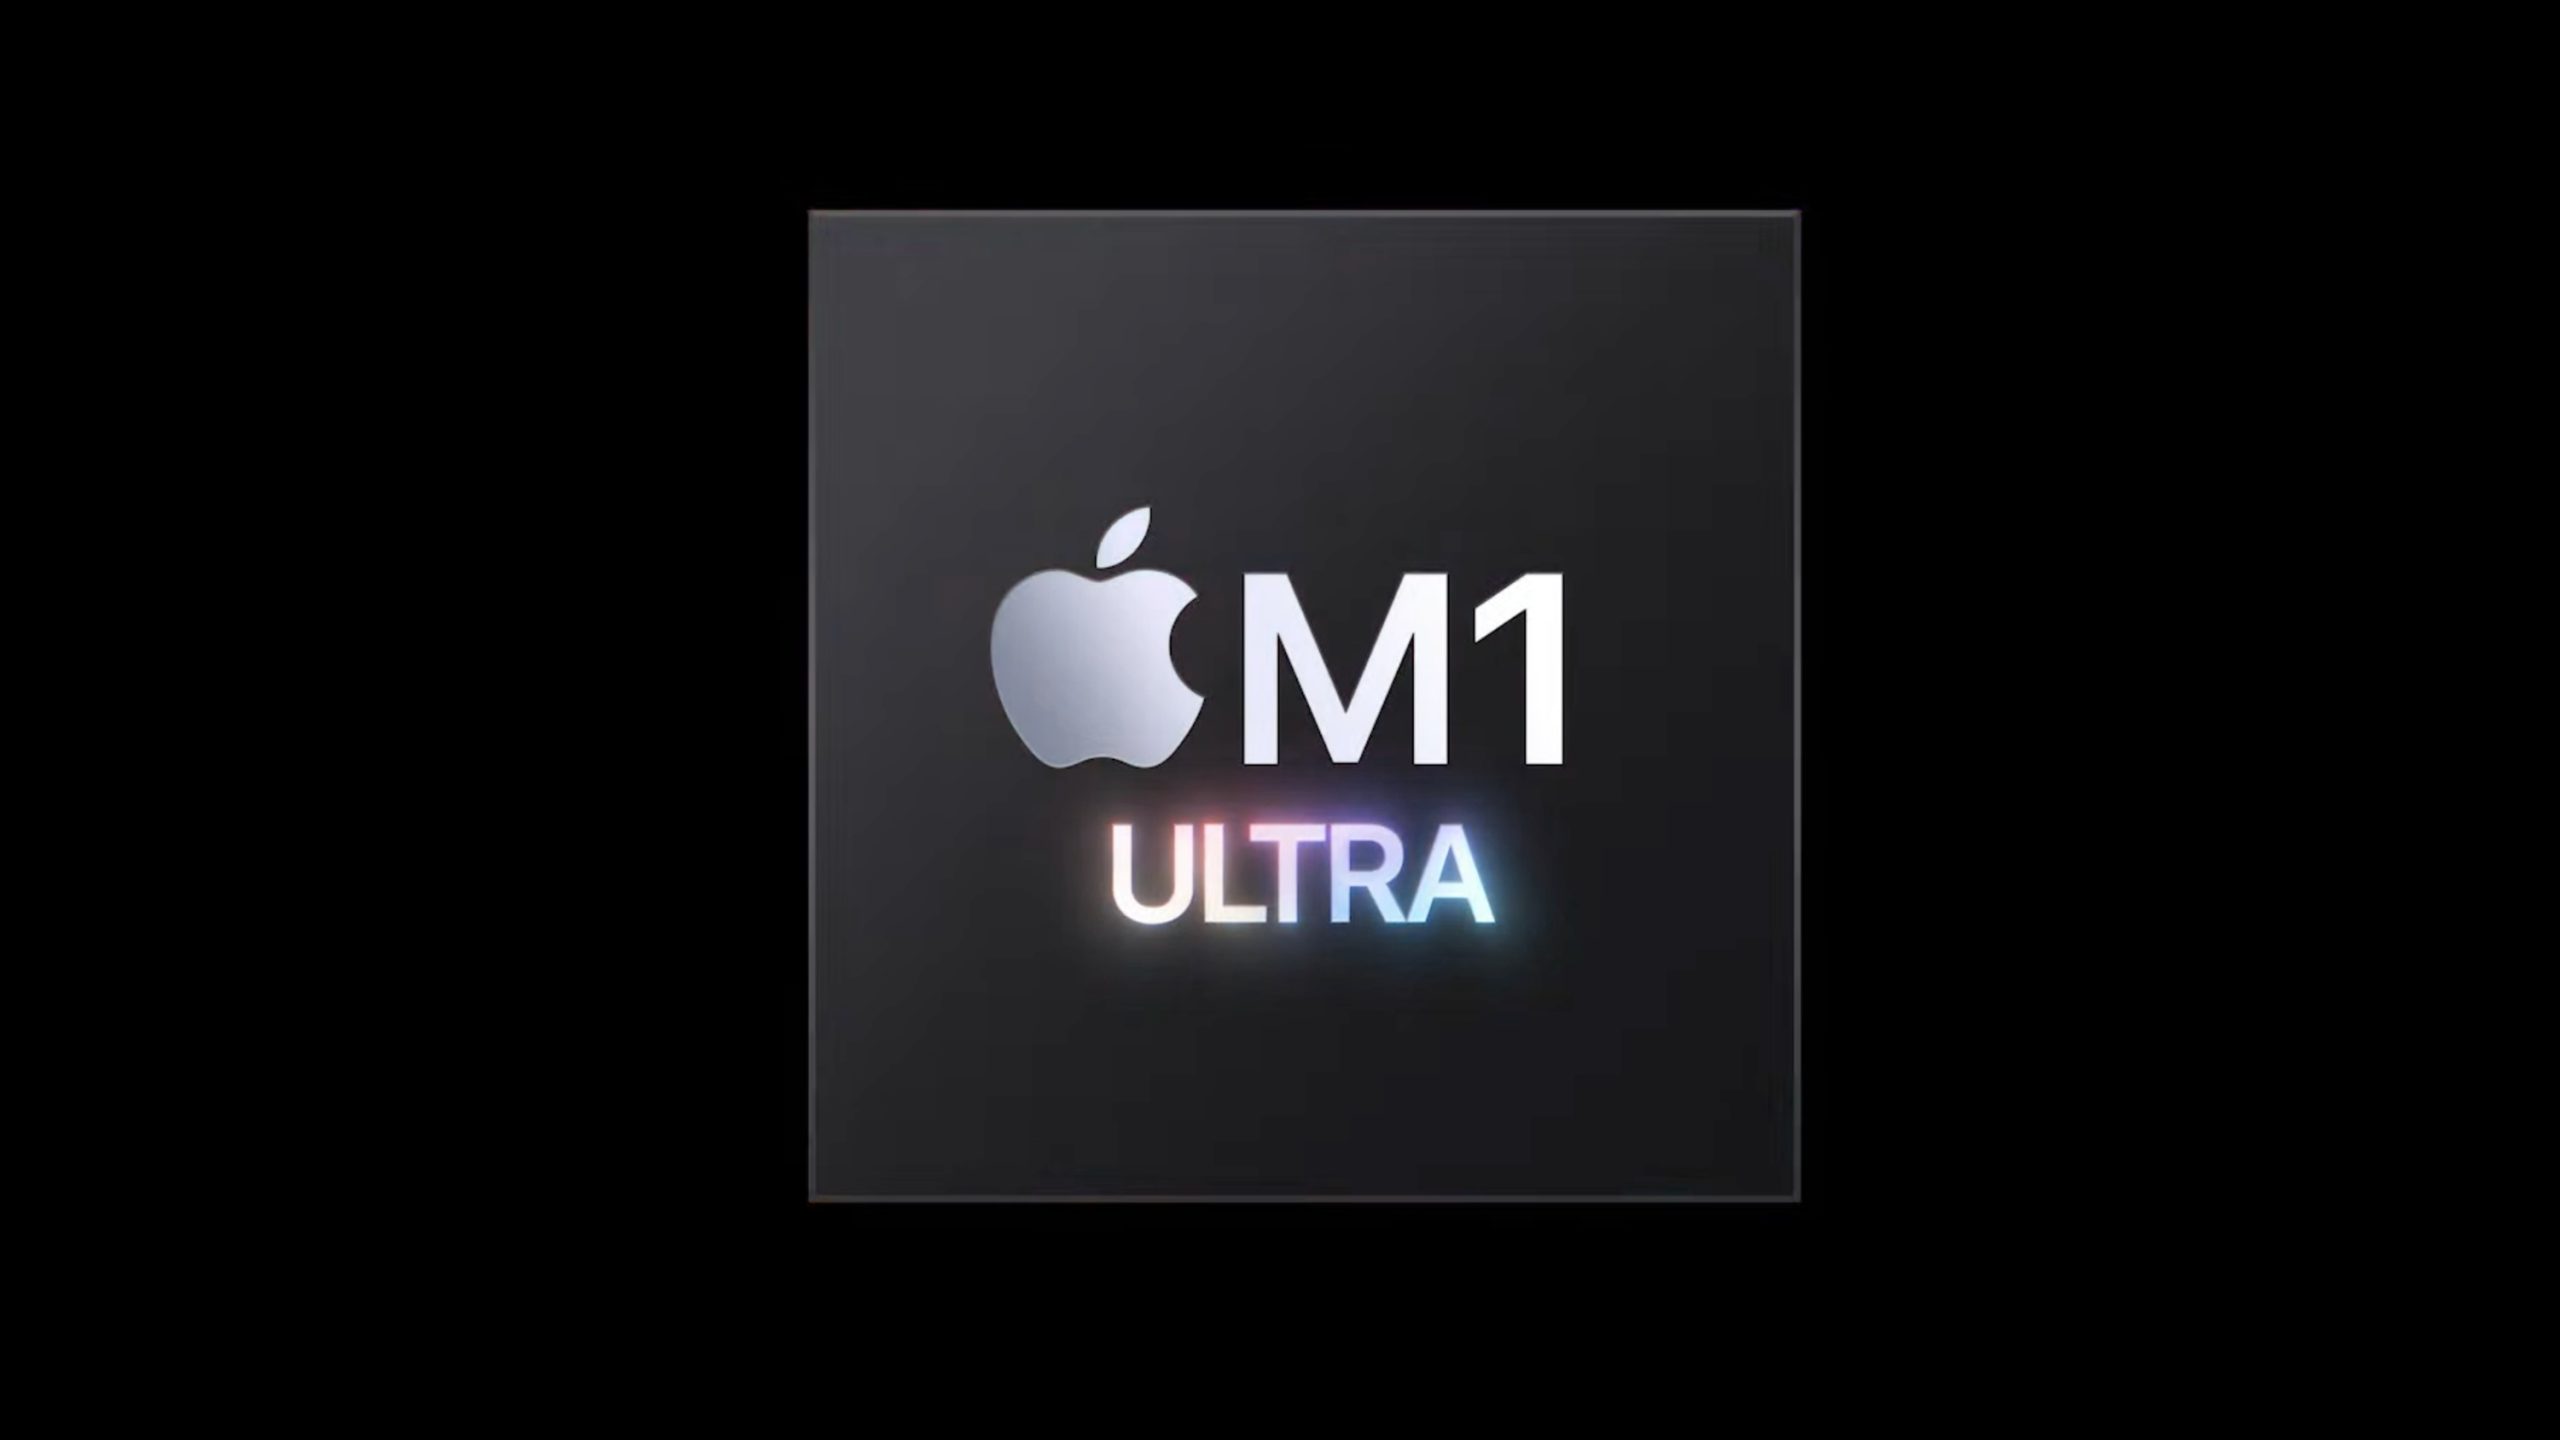 M1 Ultra Tidak Mampu Menandingi GeForce RTX 3090 Seperti Yang Didakwa Apple